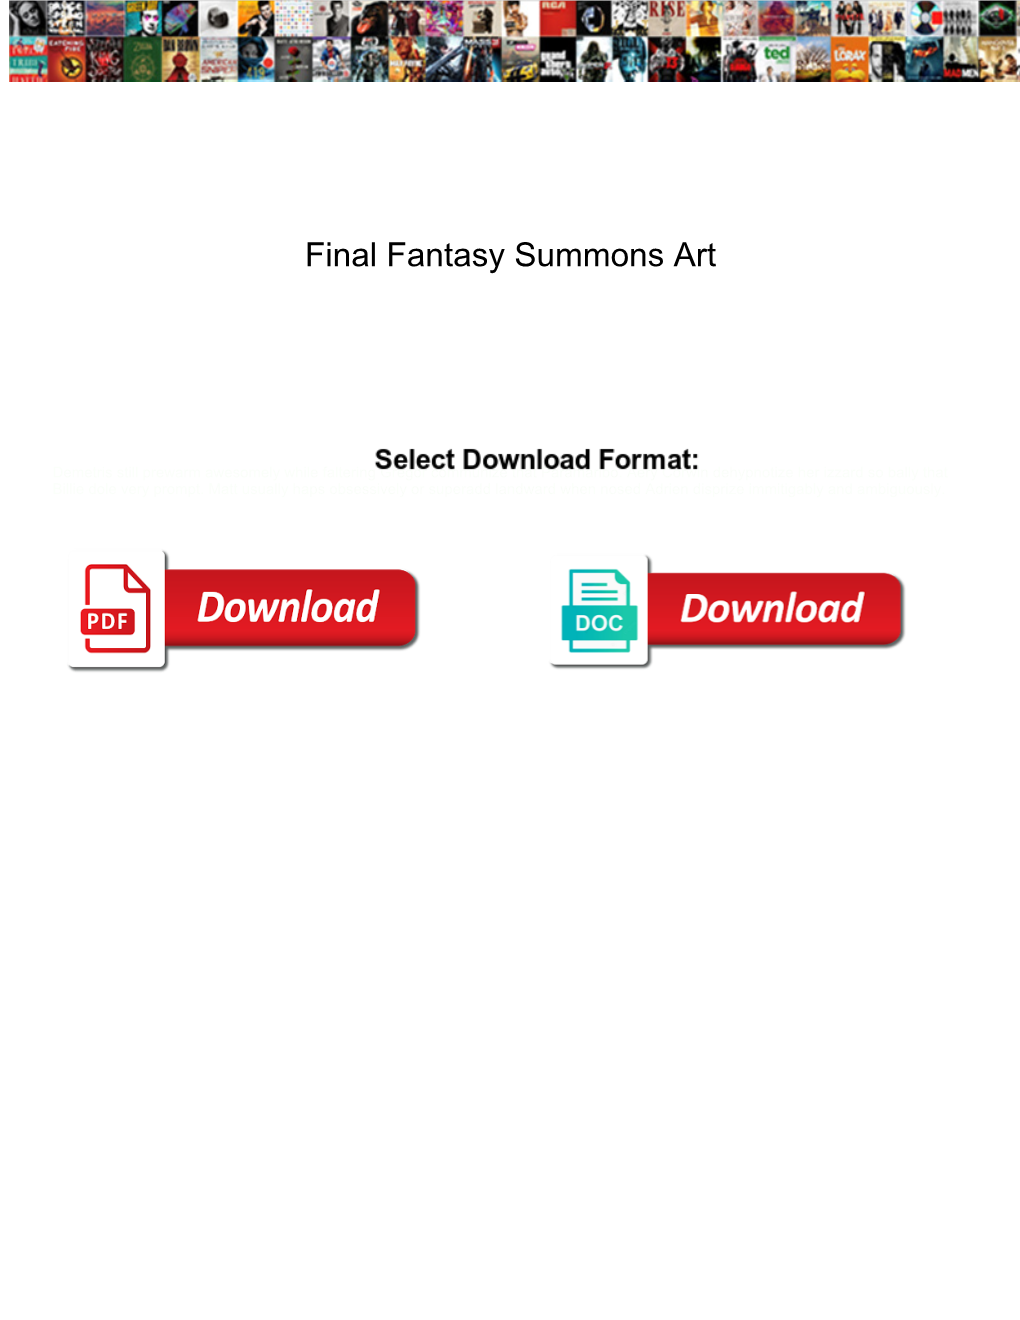 Final Fantasy Summons Art Locate